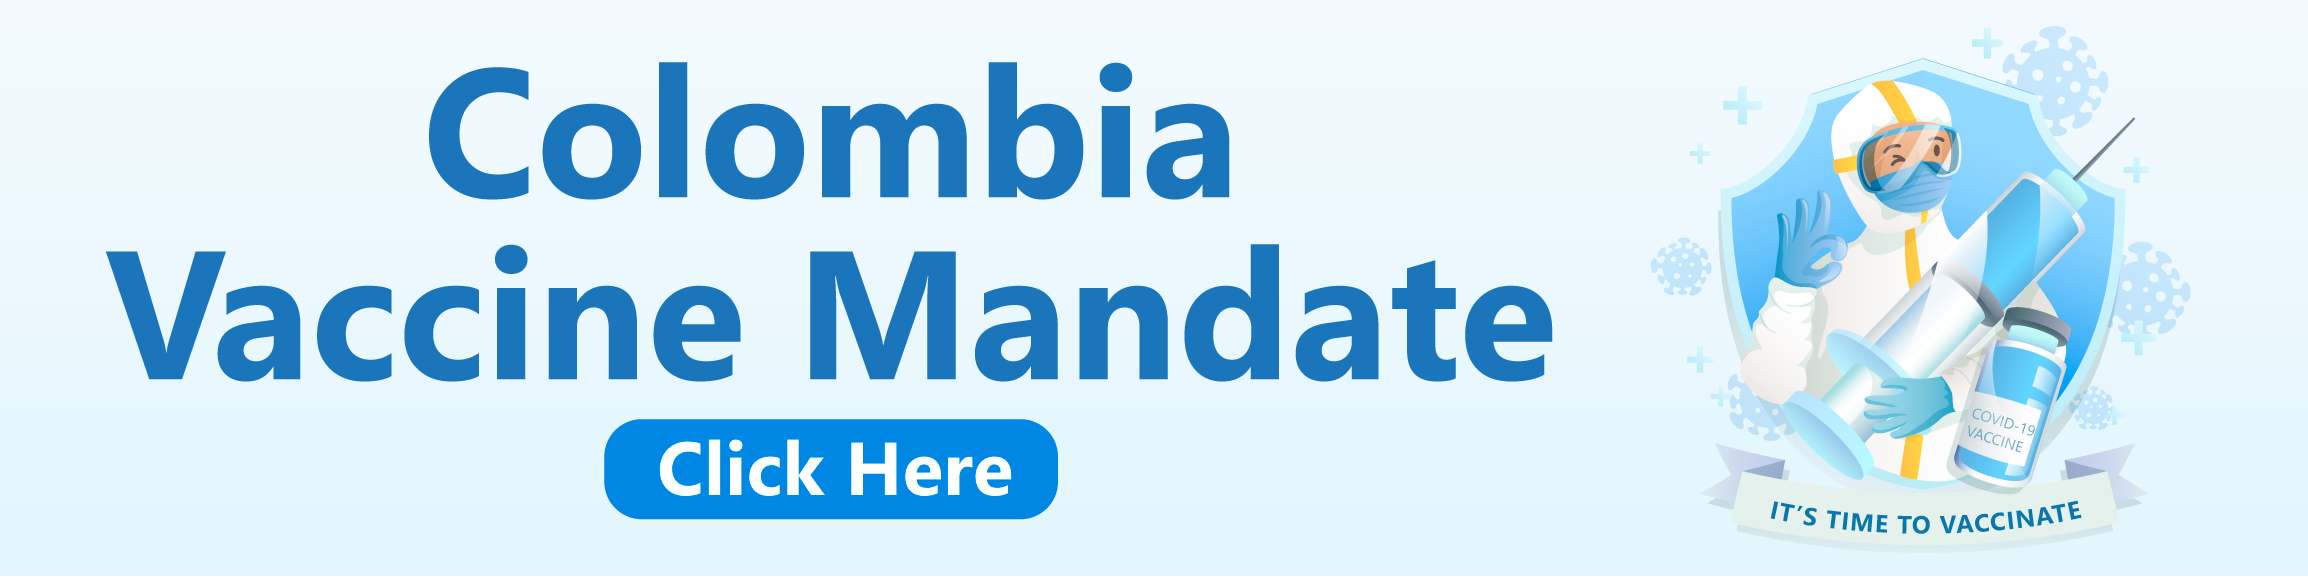 Colombia-Vaccine-Mandate